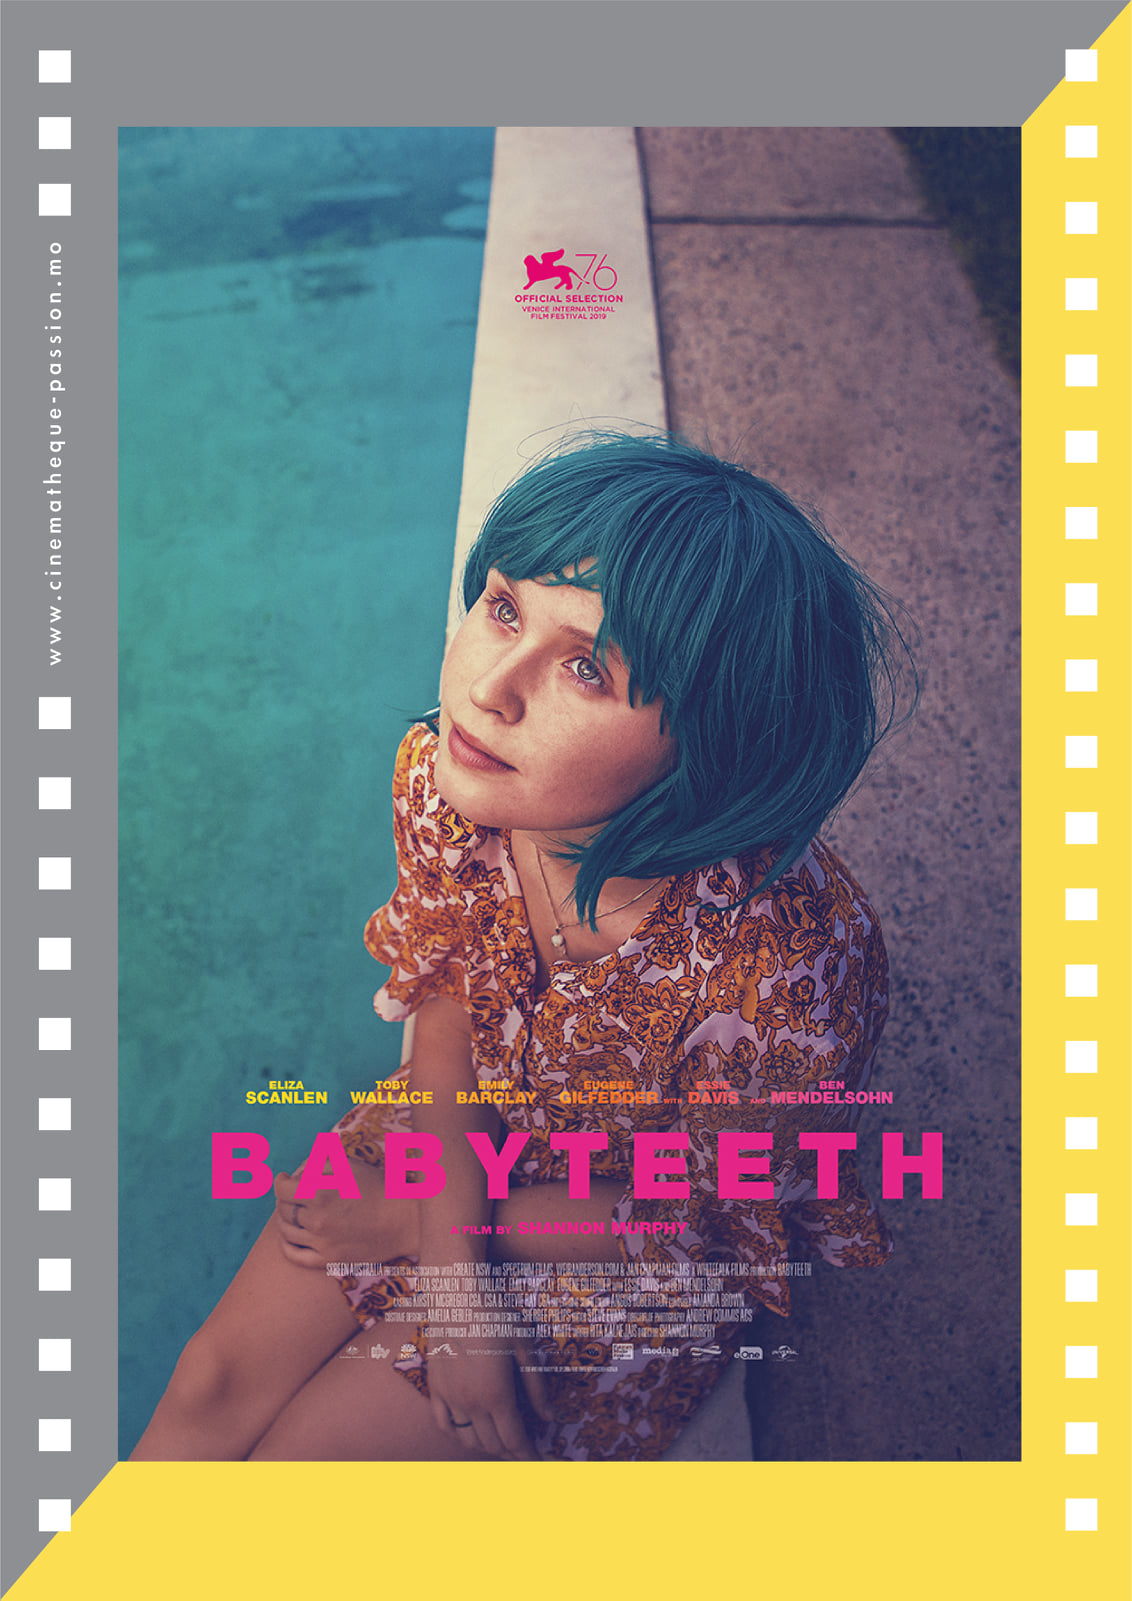 babyteeth cinematheque passion poster March events macau